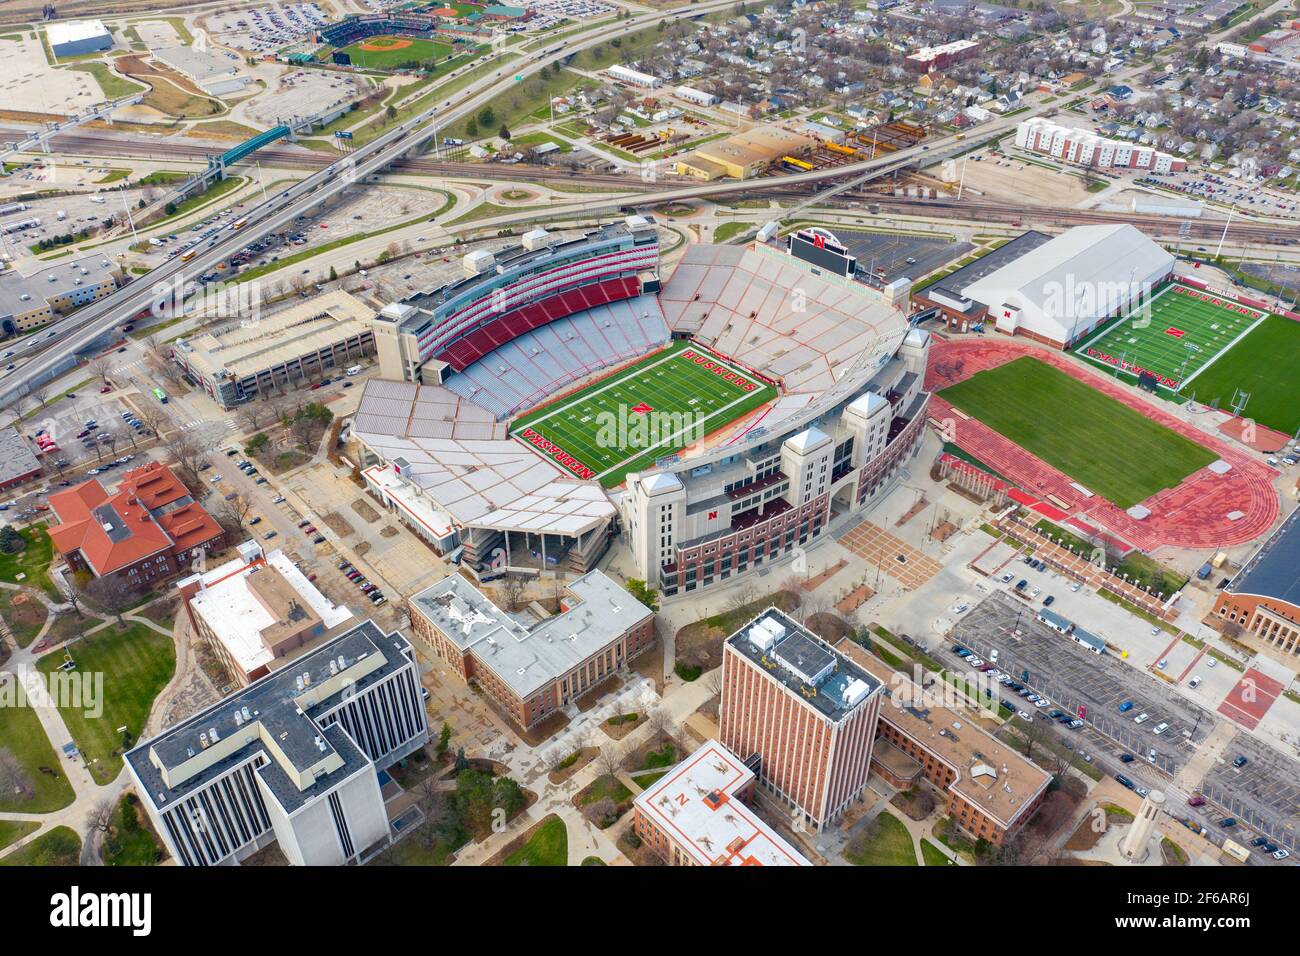 Memorial Stadium, Football Field, University of Nebraska Cornhuskers Stock Photo